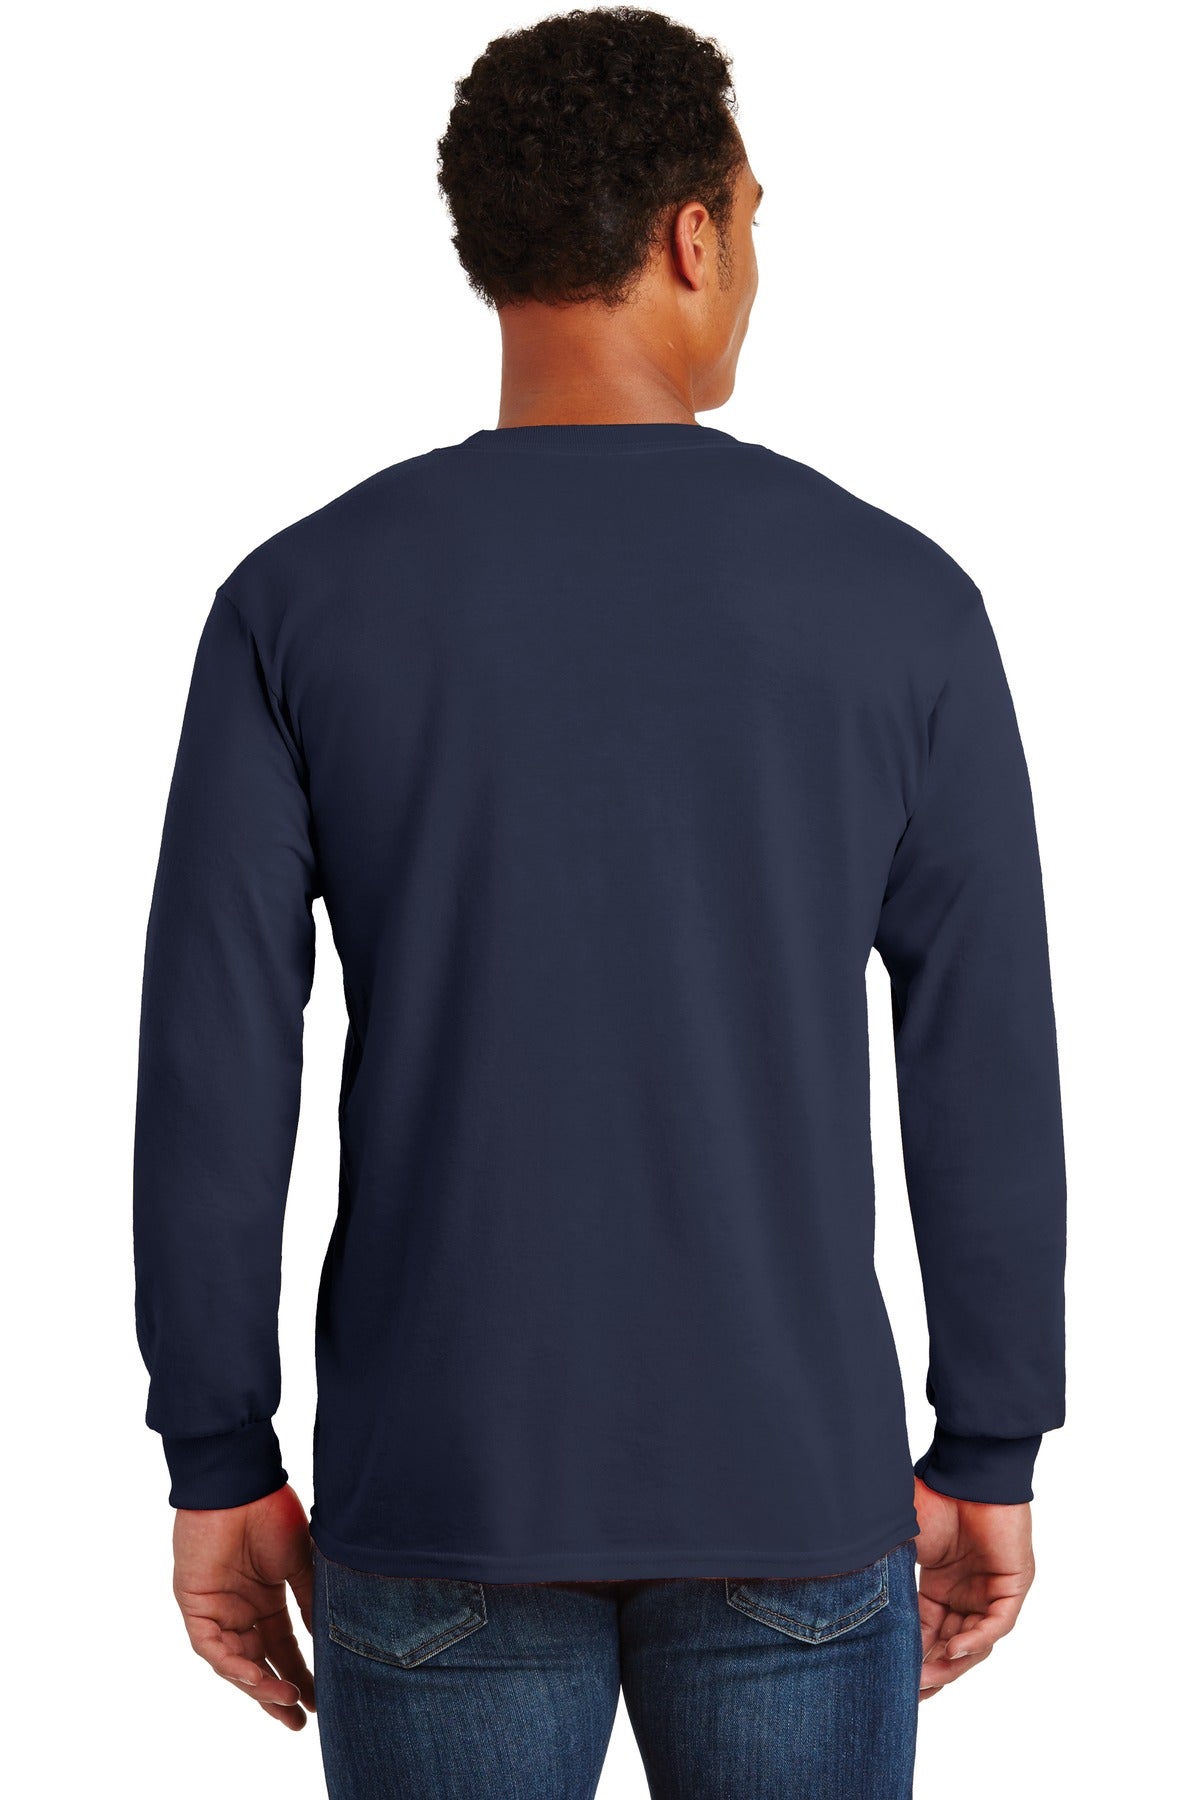 Gildan - Ultra Cotton 100% US Cotton Long Sleeve T-Shirt with Pocket. 2410